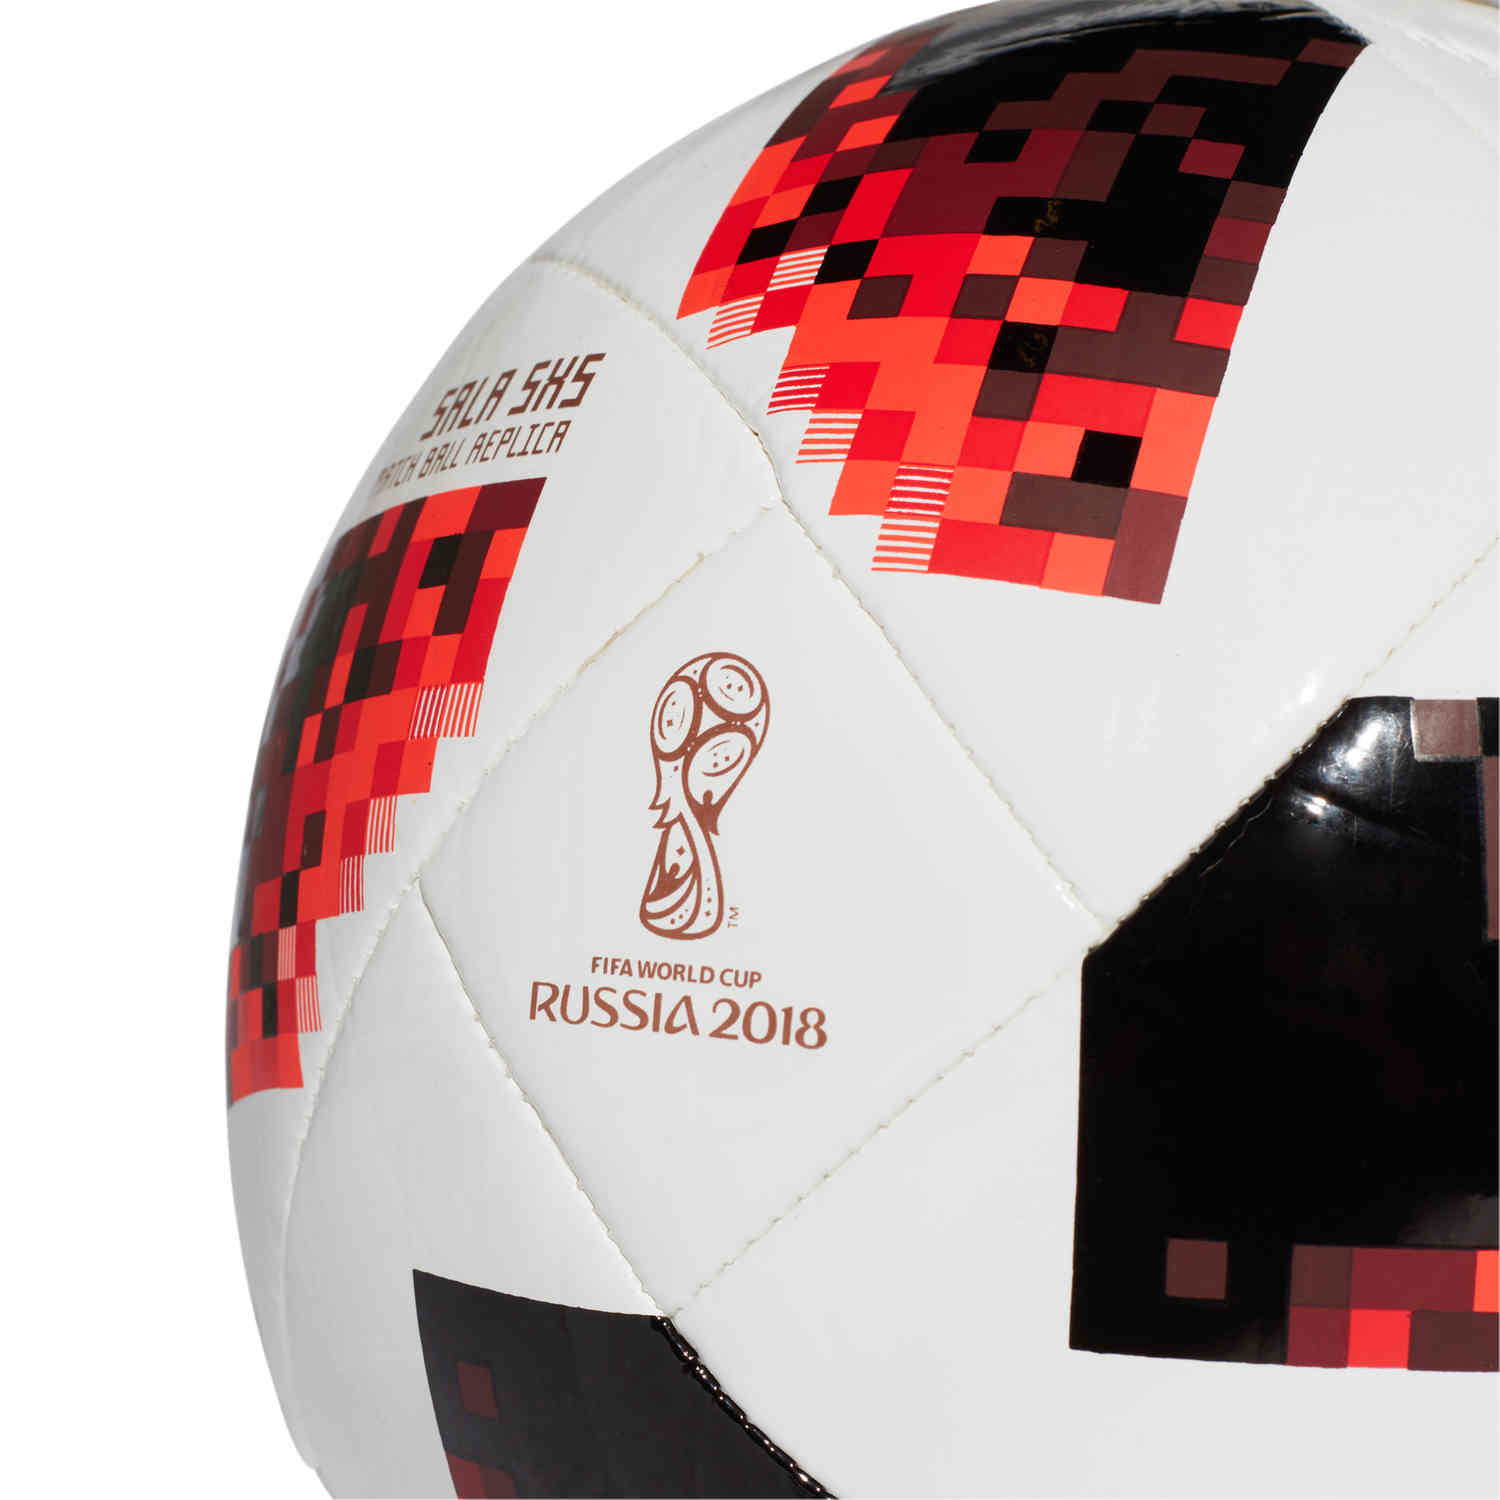 adidas World Cup Sala 5x5 Futsal Ball 